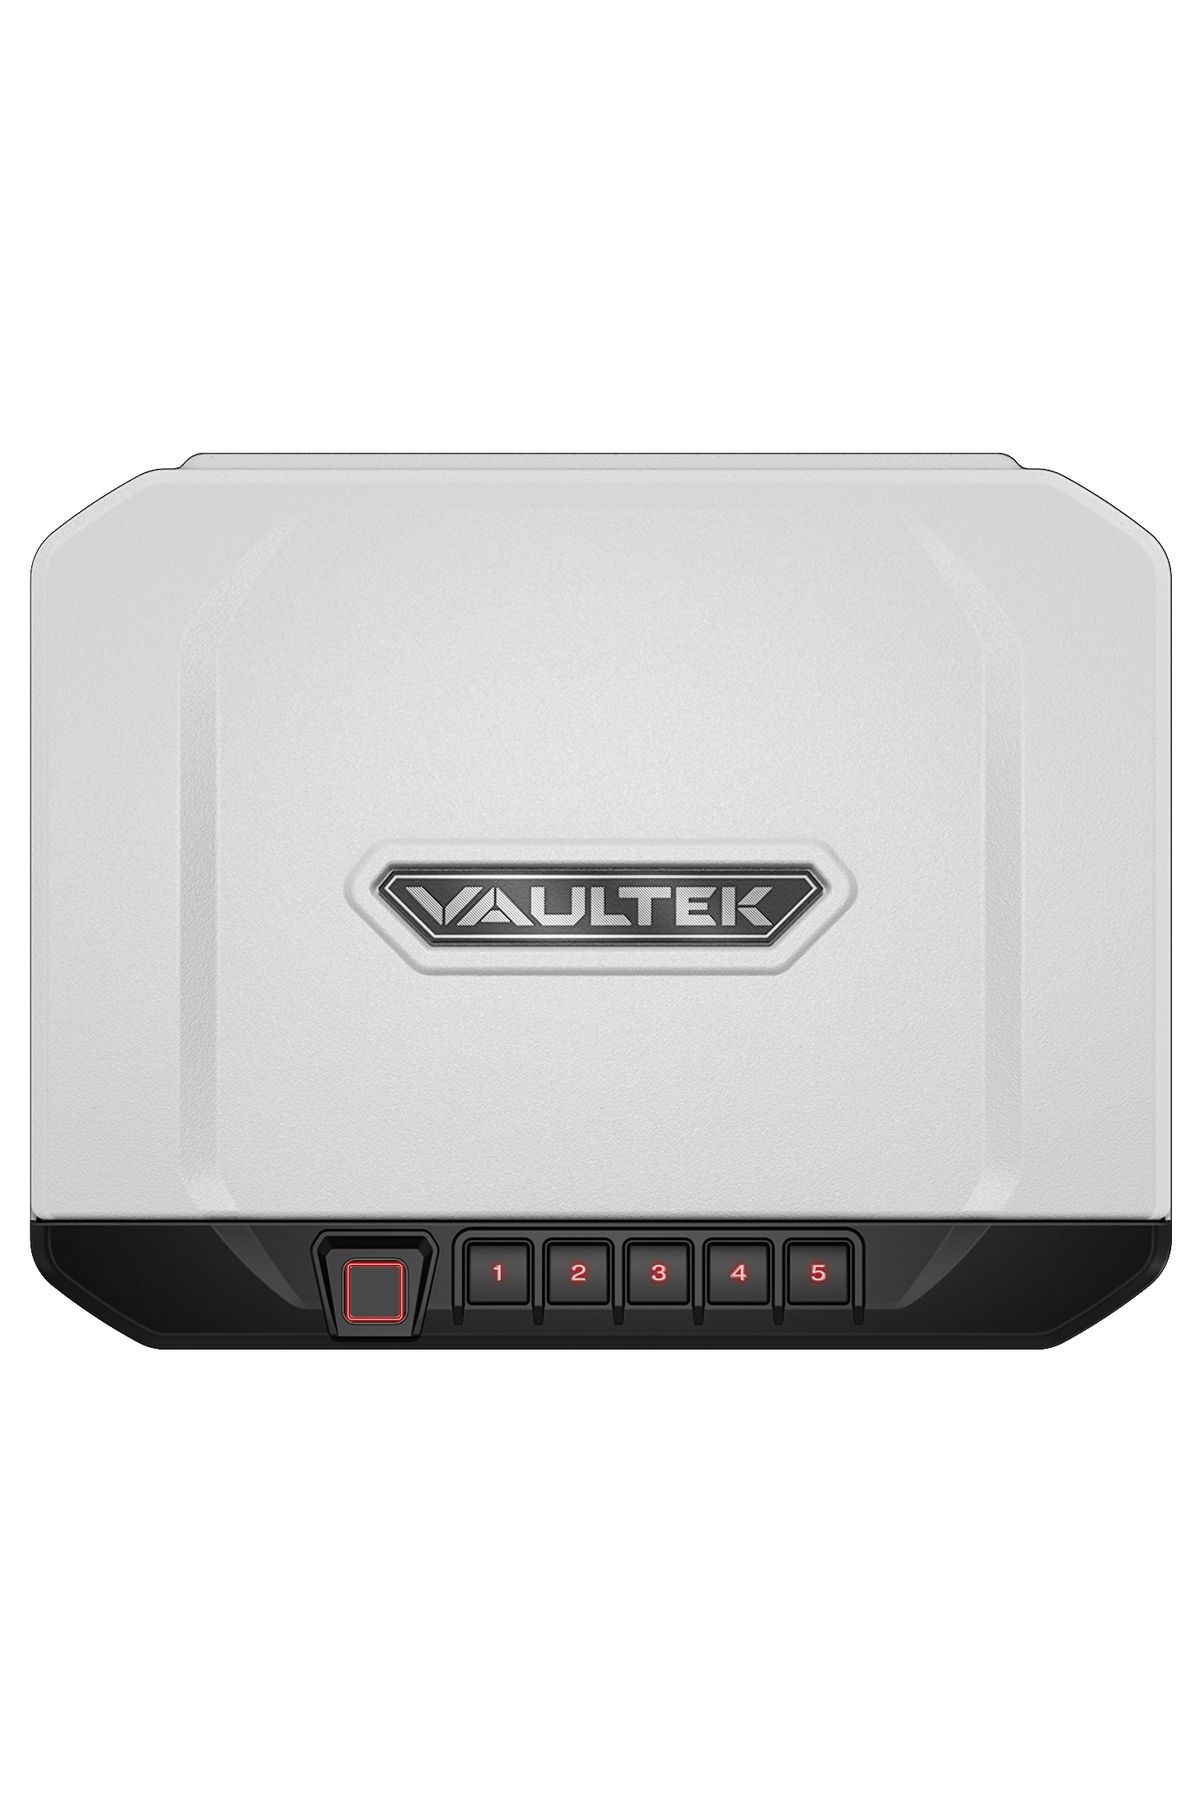 Vaultek Vs20i Biometric Çelik Kasa